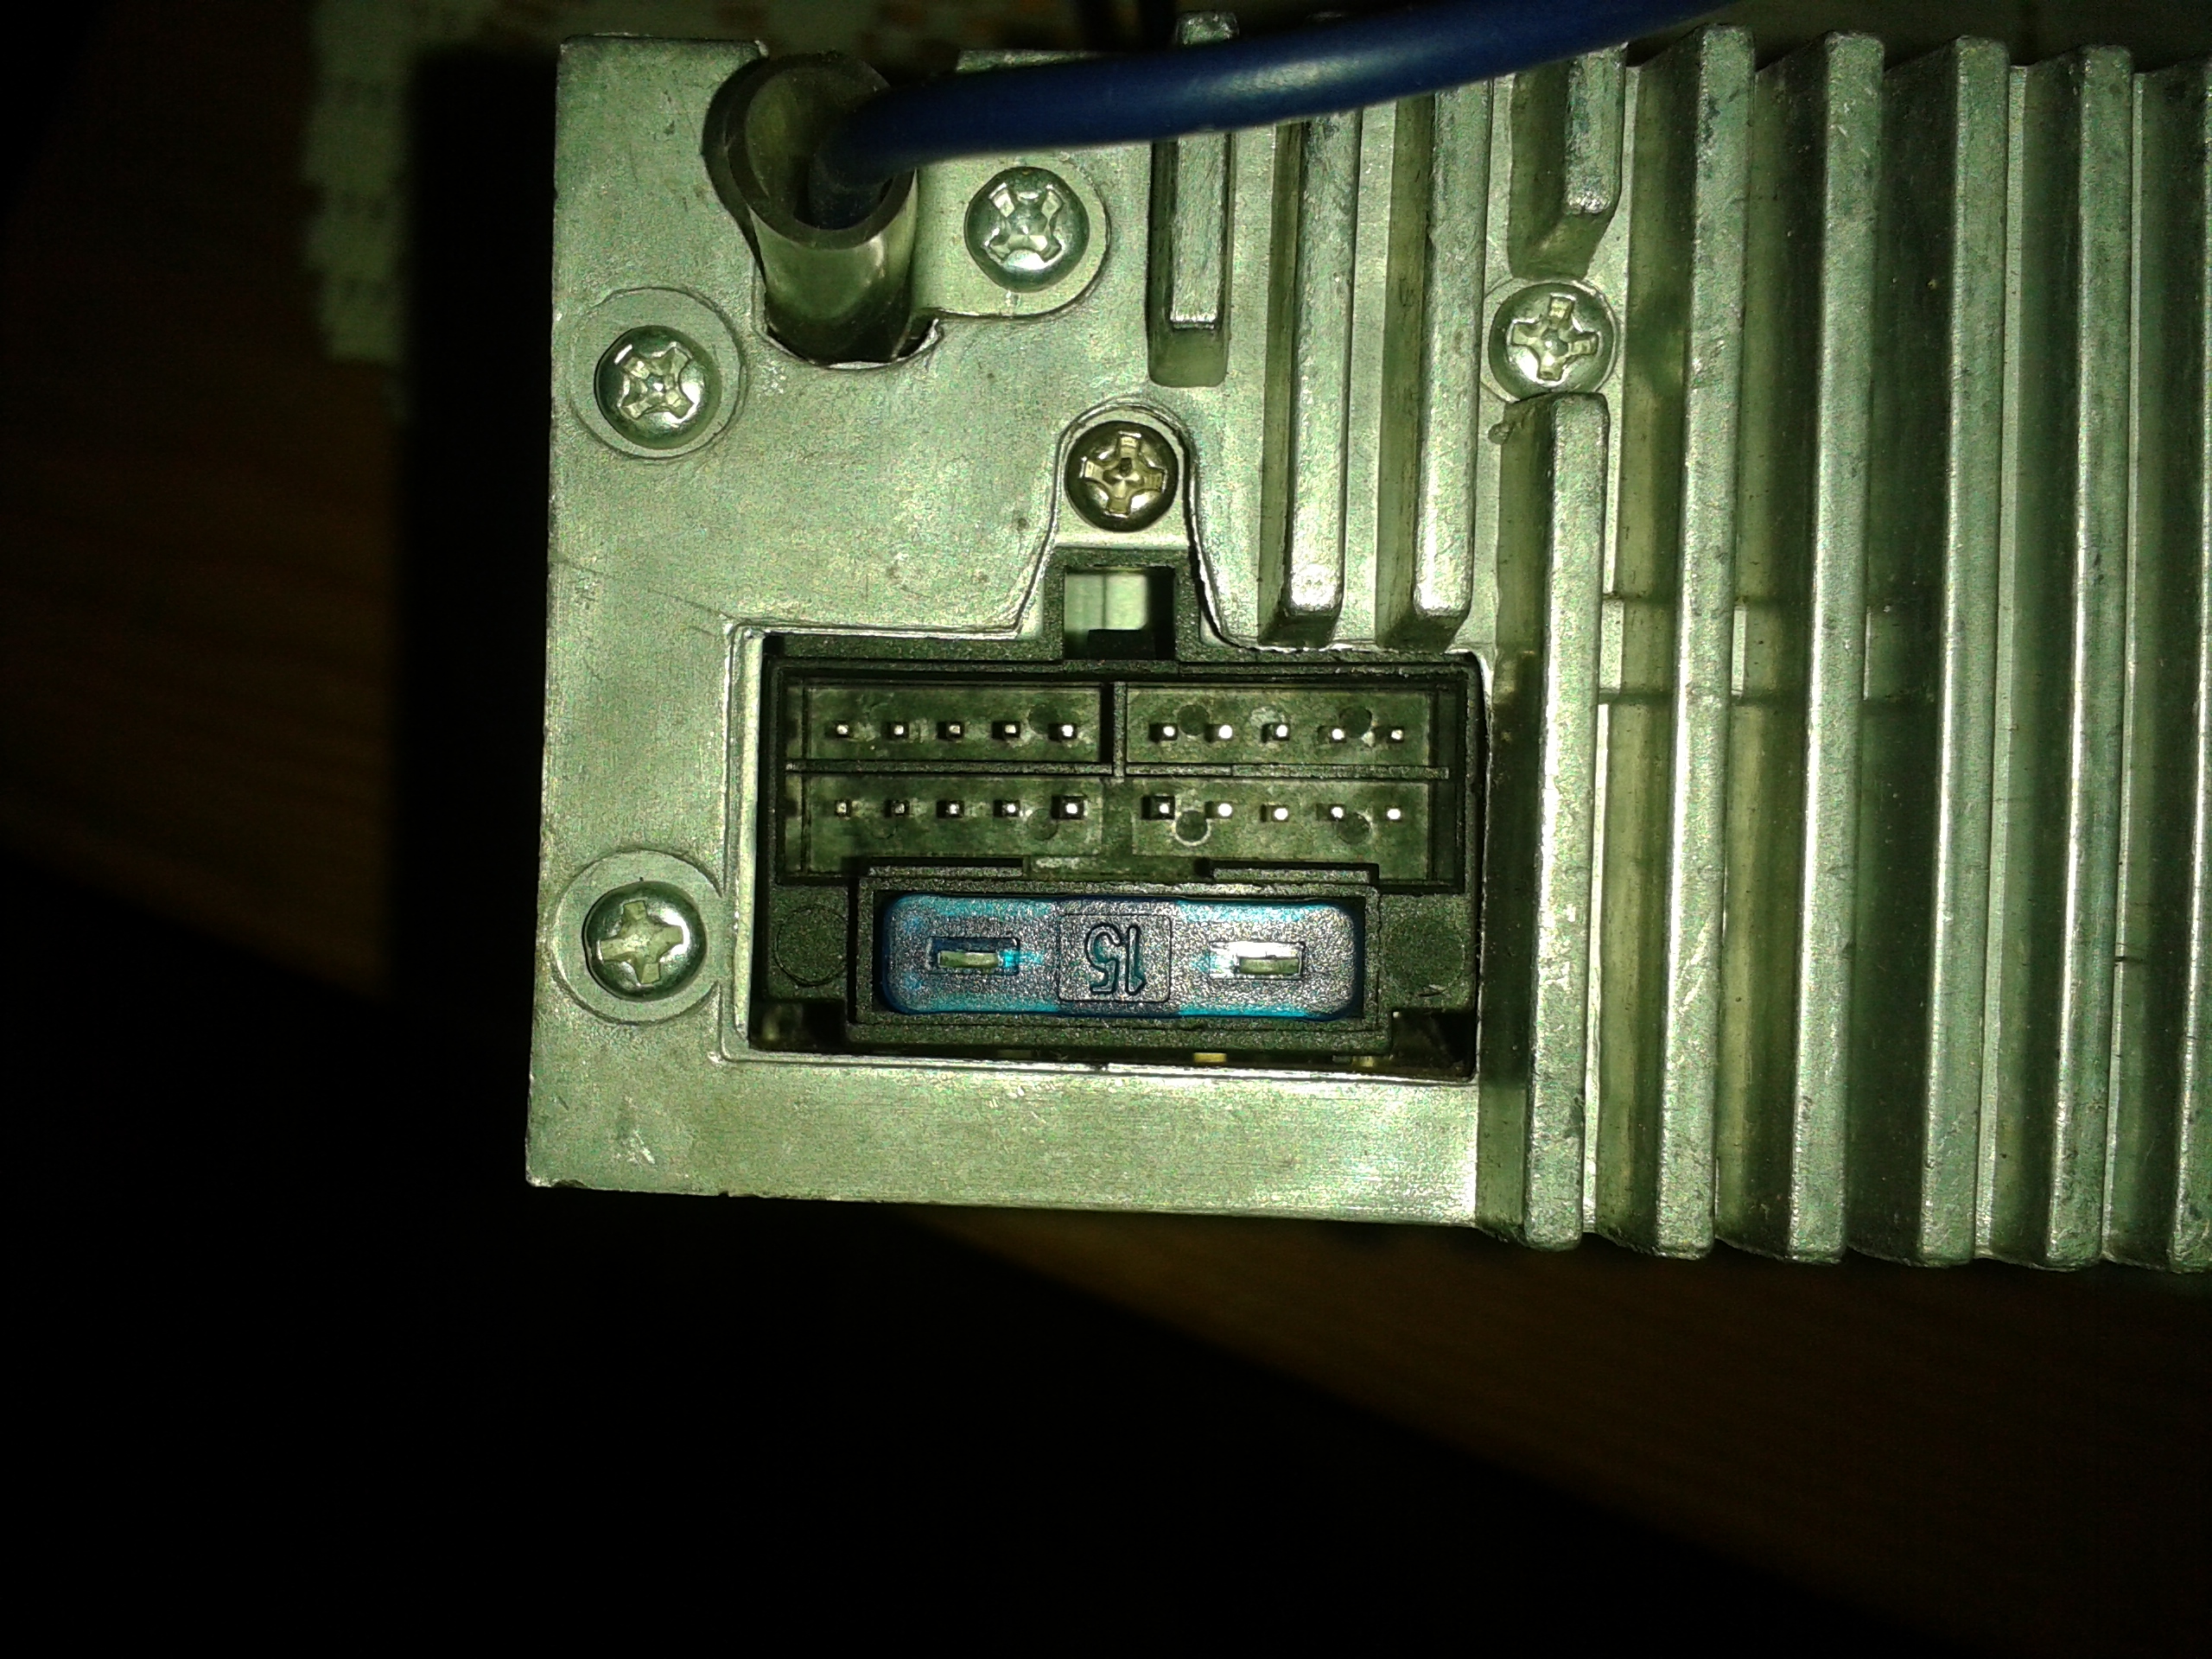 Kostka do radia BOSS RDS3160MP3 elektroda.pl